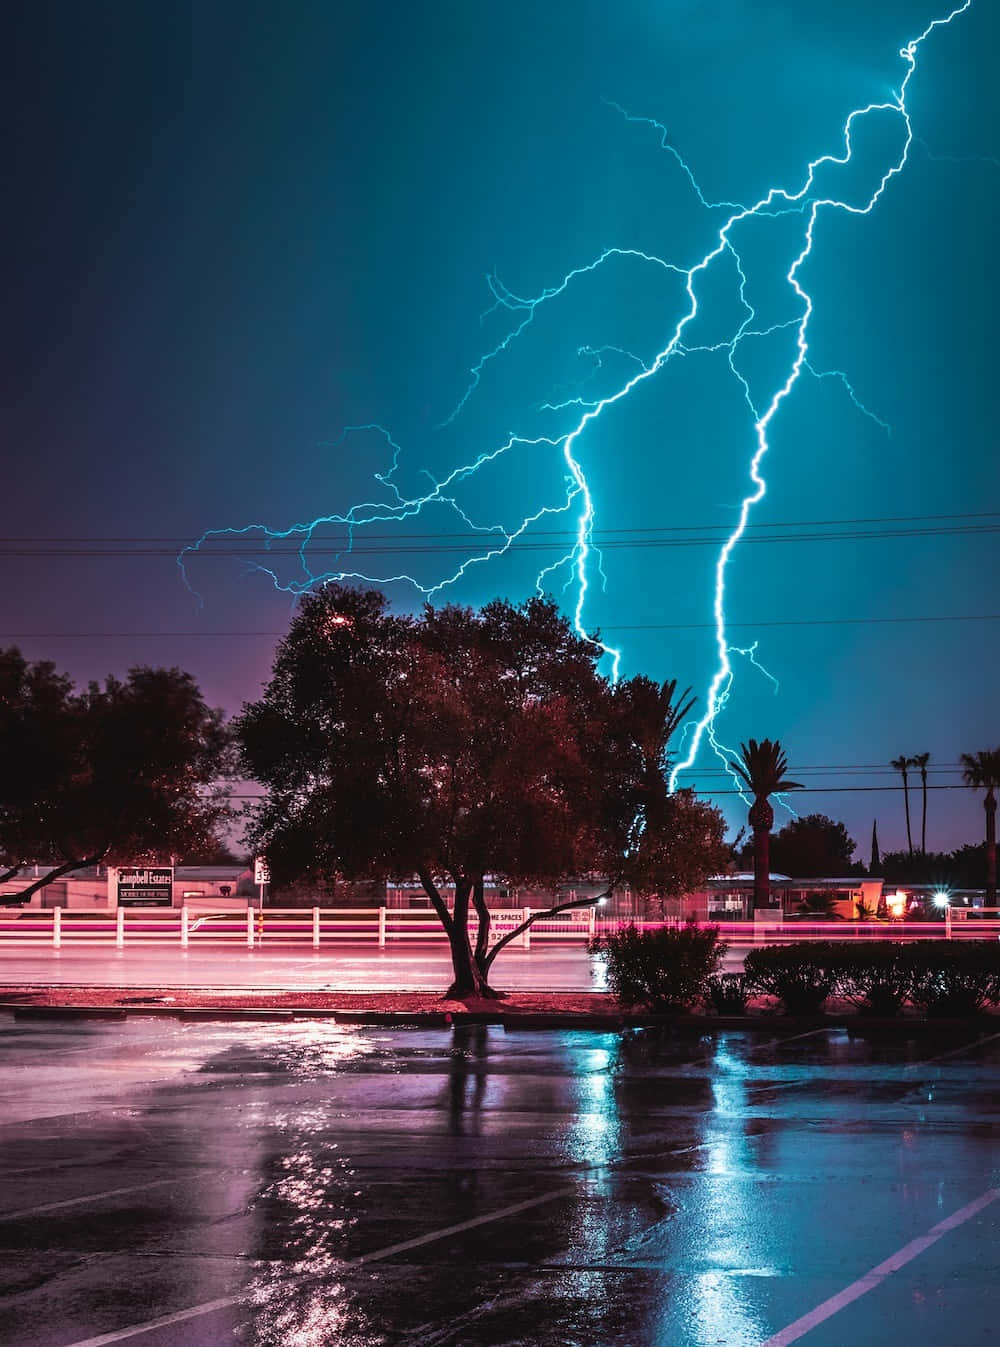 An Electrifying Look at a Striking Lightning Bolt